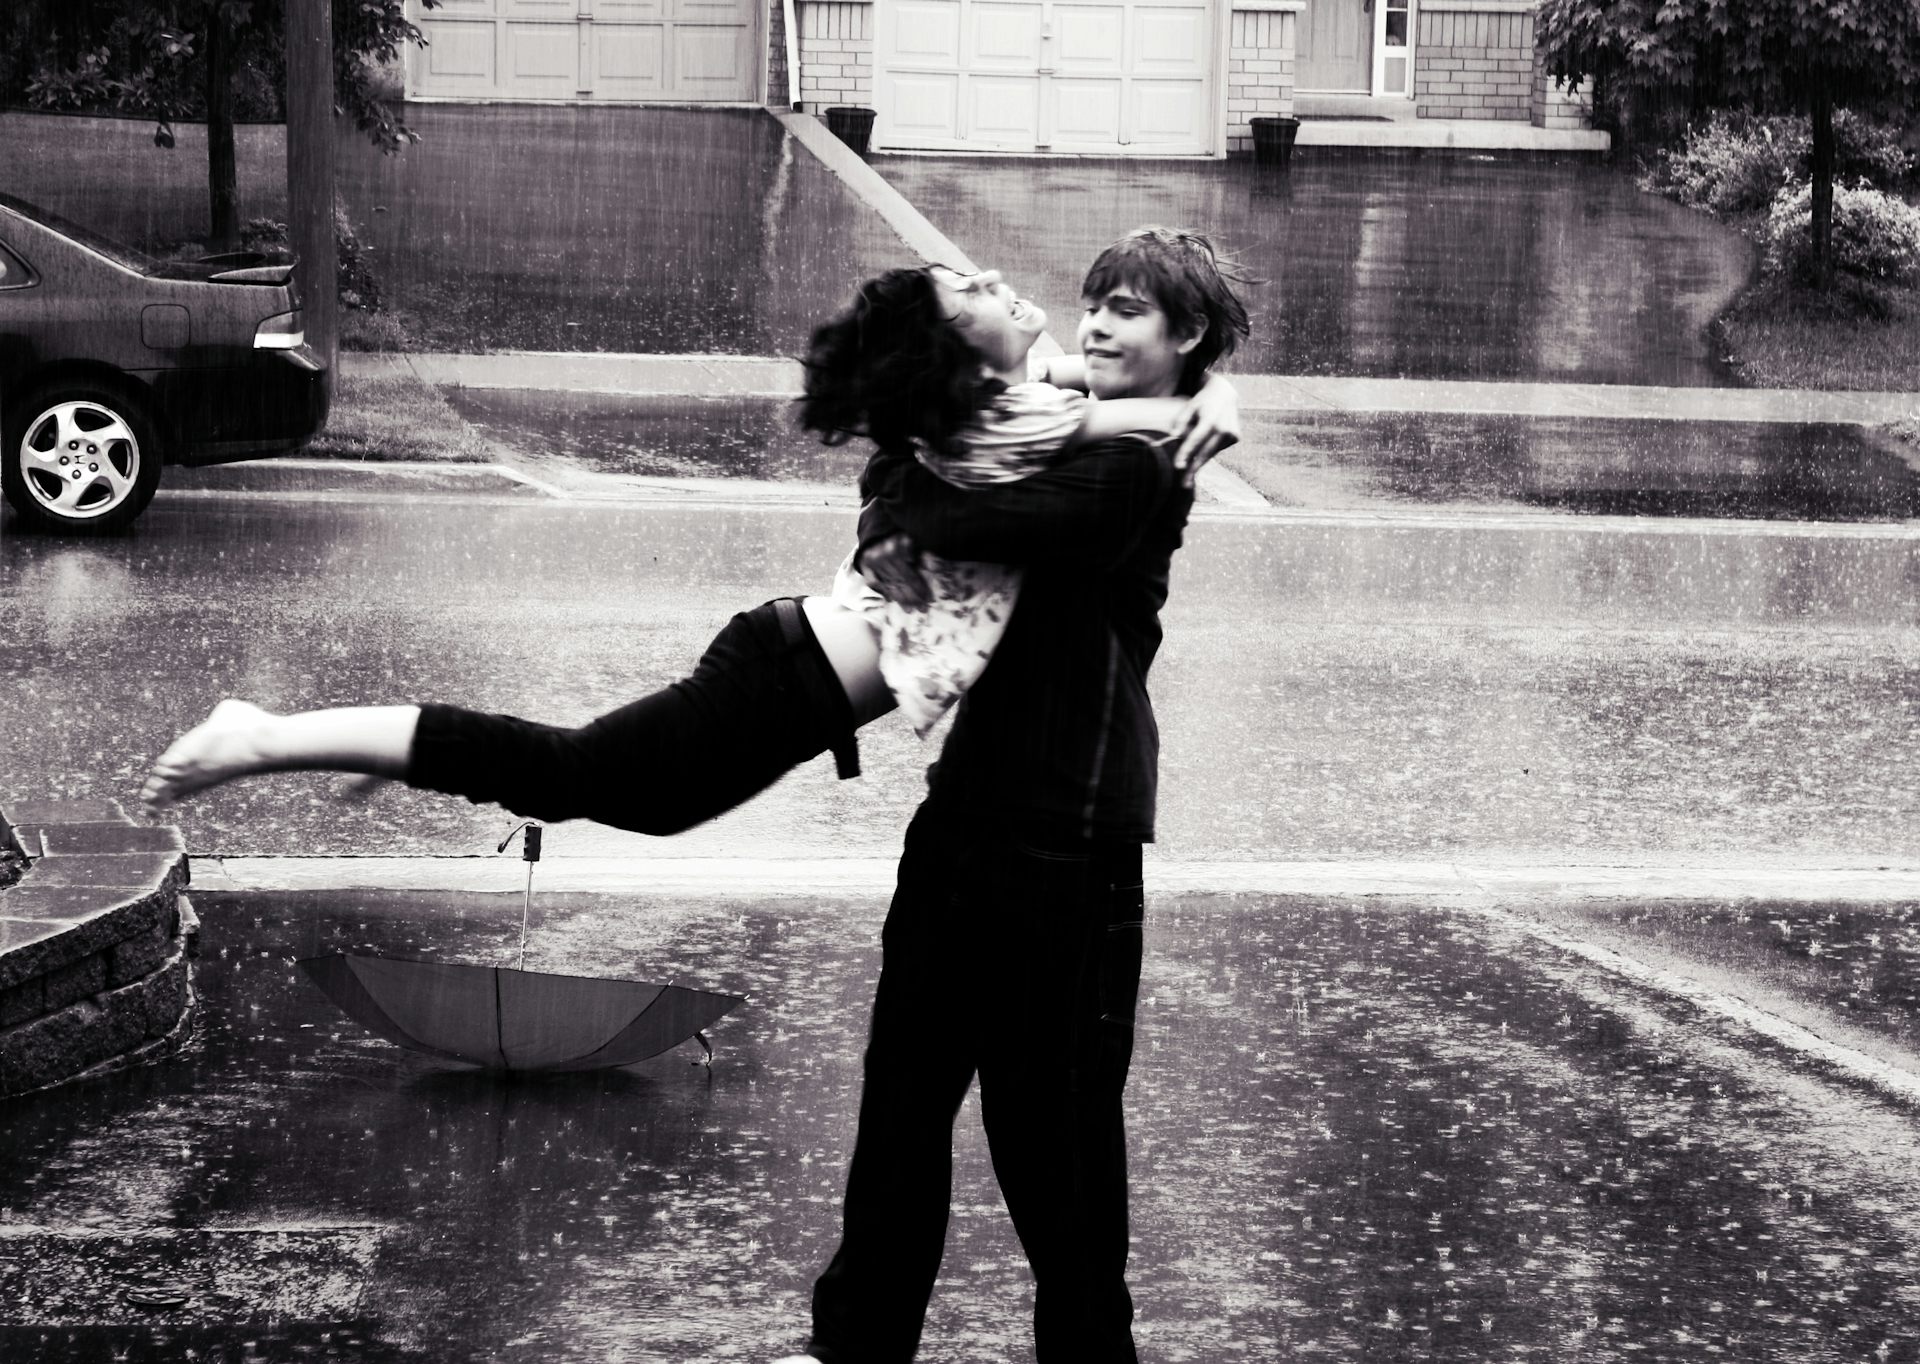 Пара танцует под дождем